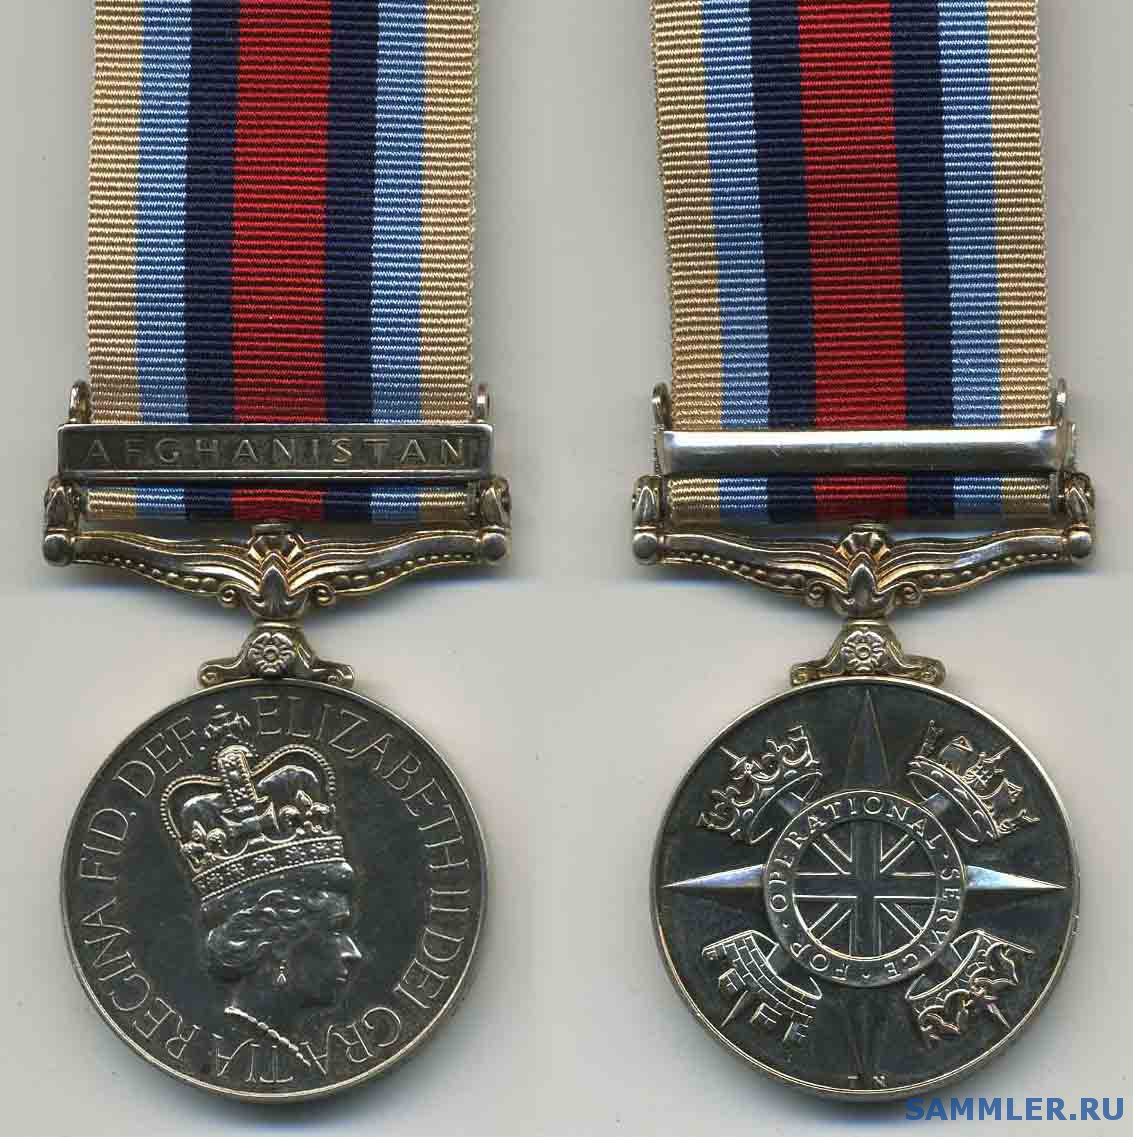 Afghanistan_Operational_Service_Medal.jpg